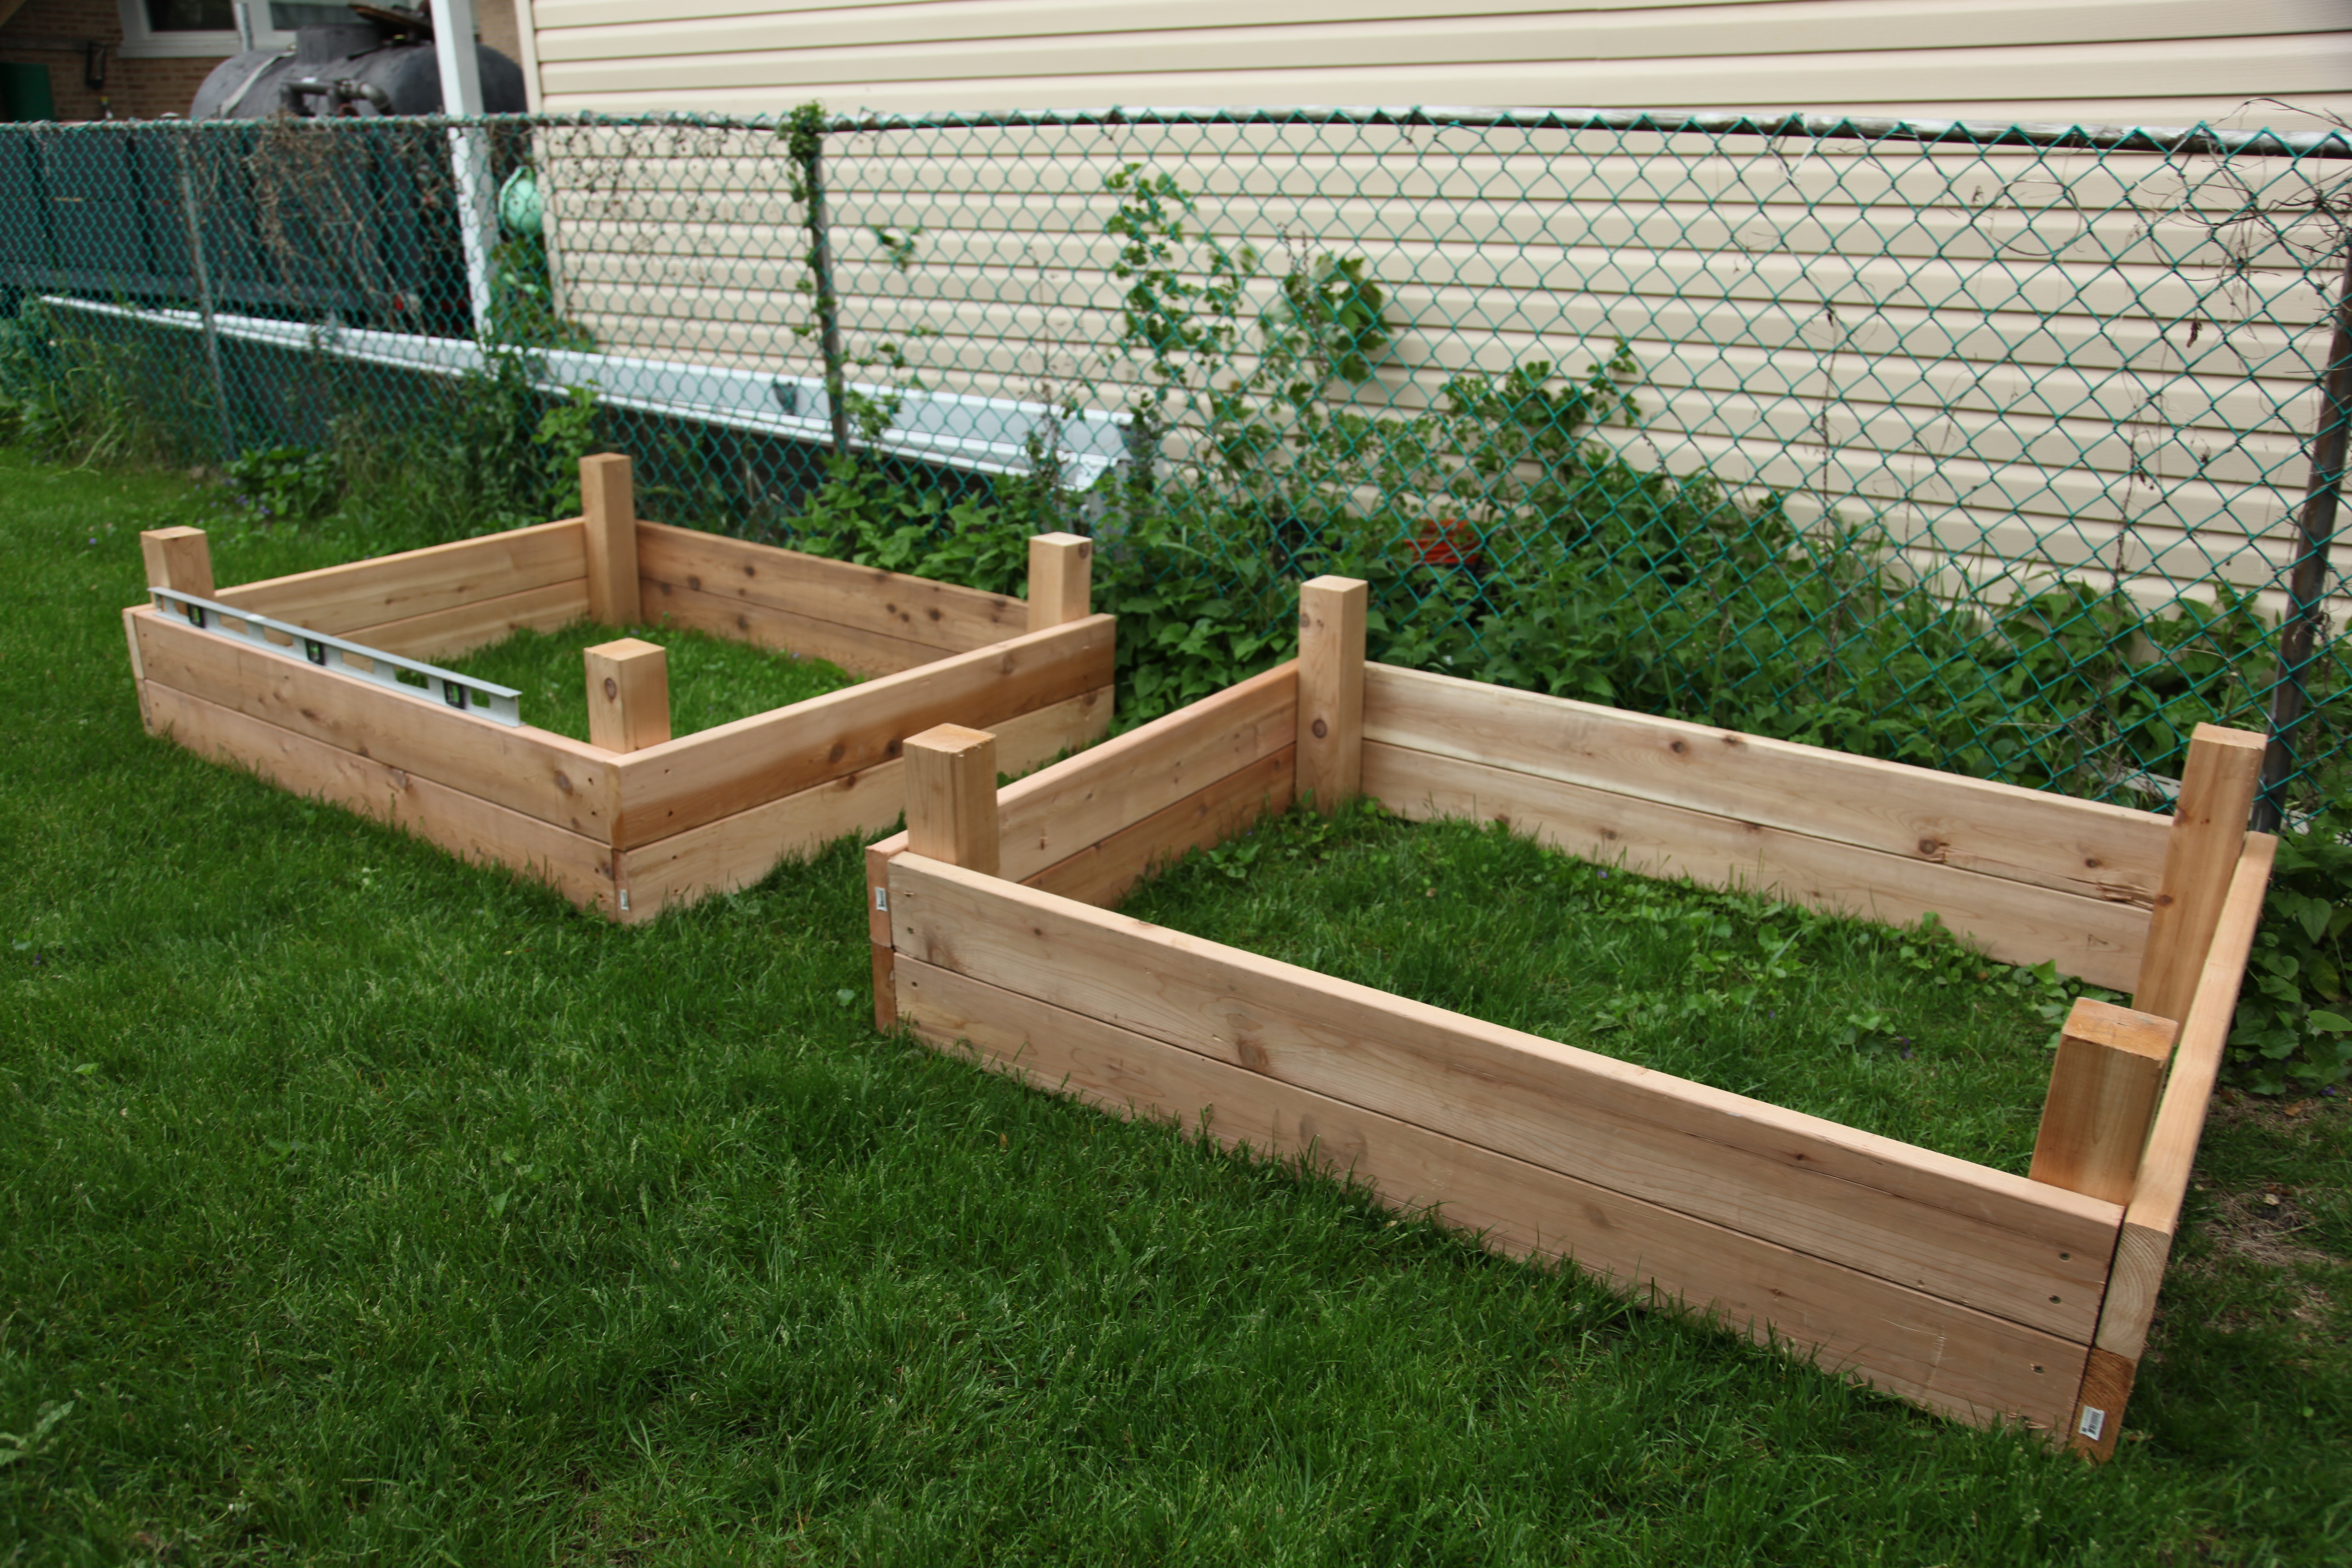 Best ideas about DIY Raised Garden
. Save or Pin DIY Raised Garden Beds Now.